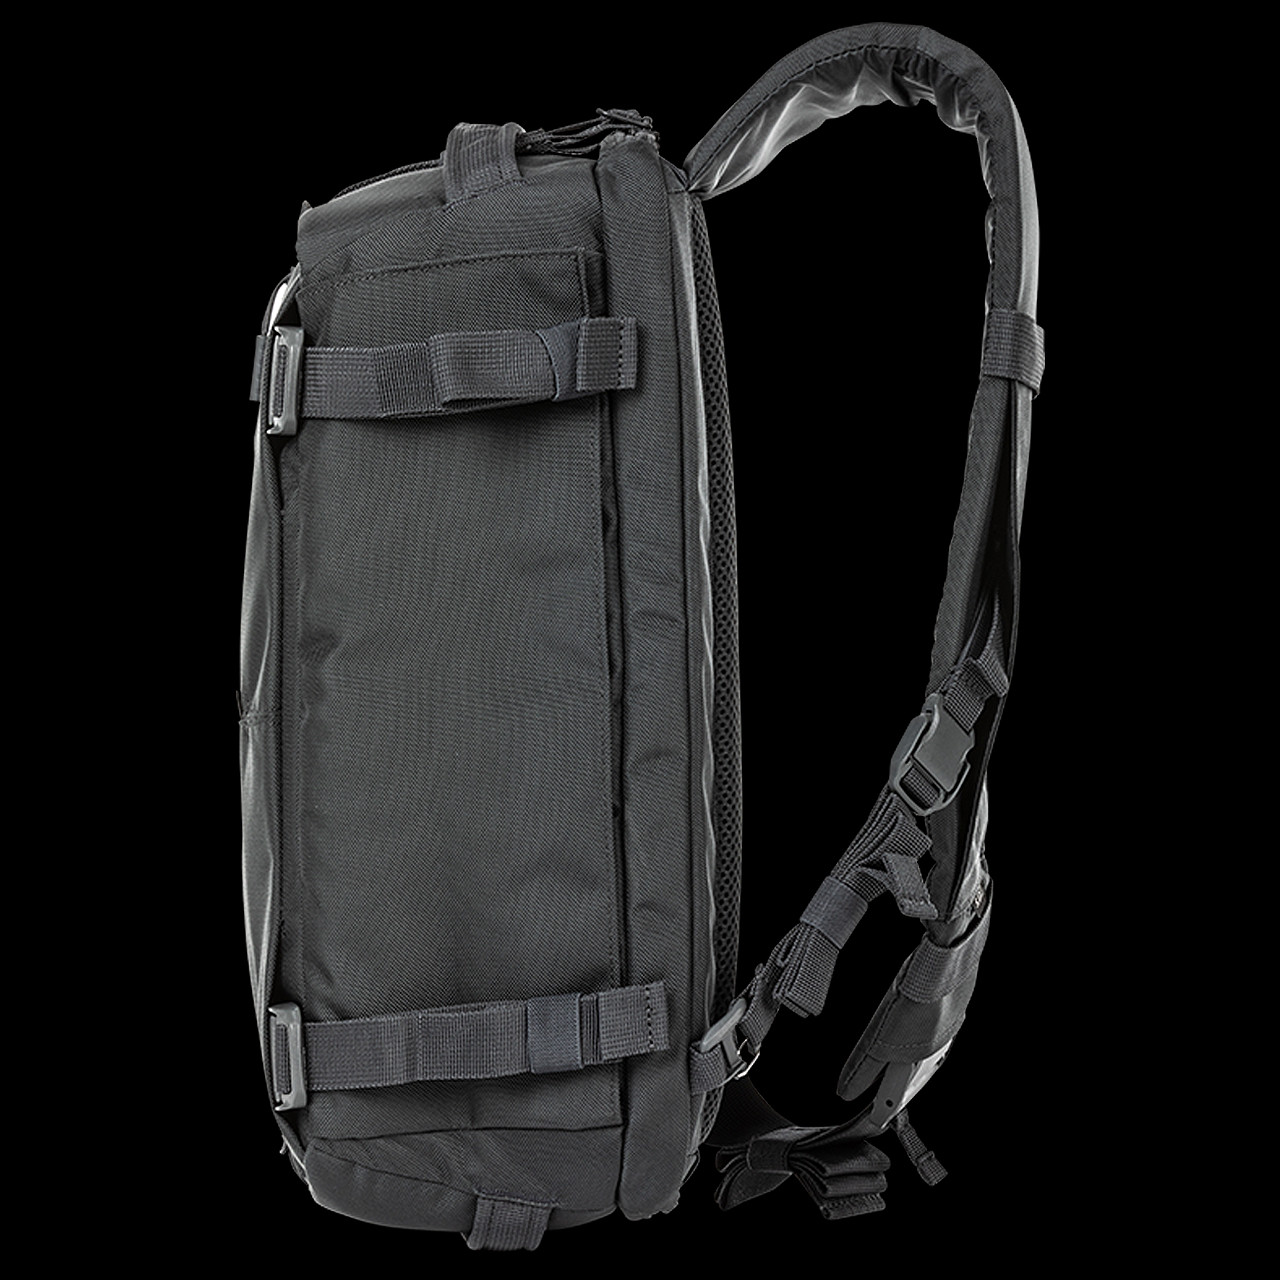 LV10 Sling Pack 2.0: Tactical Versatility & Comfort